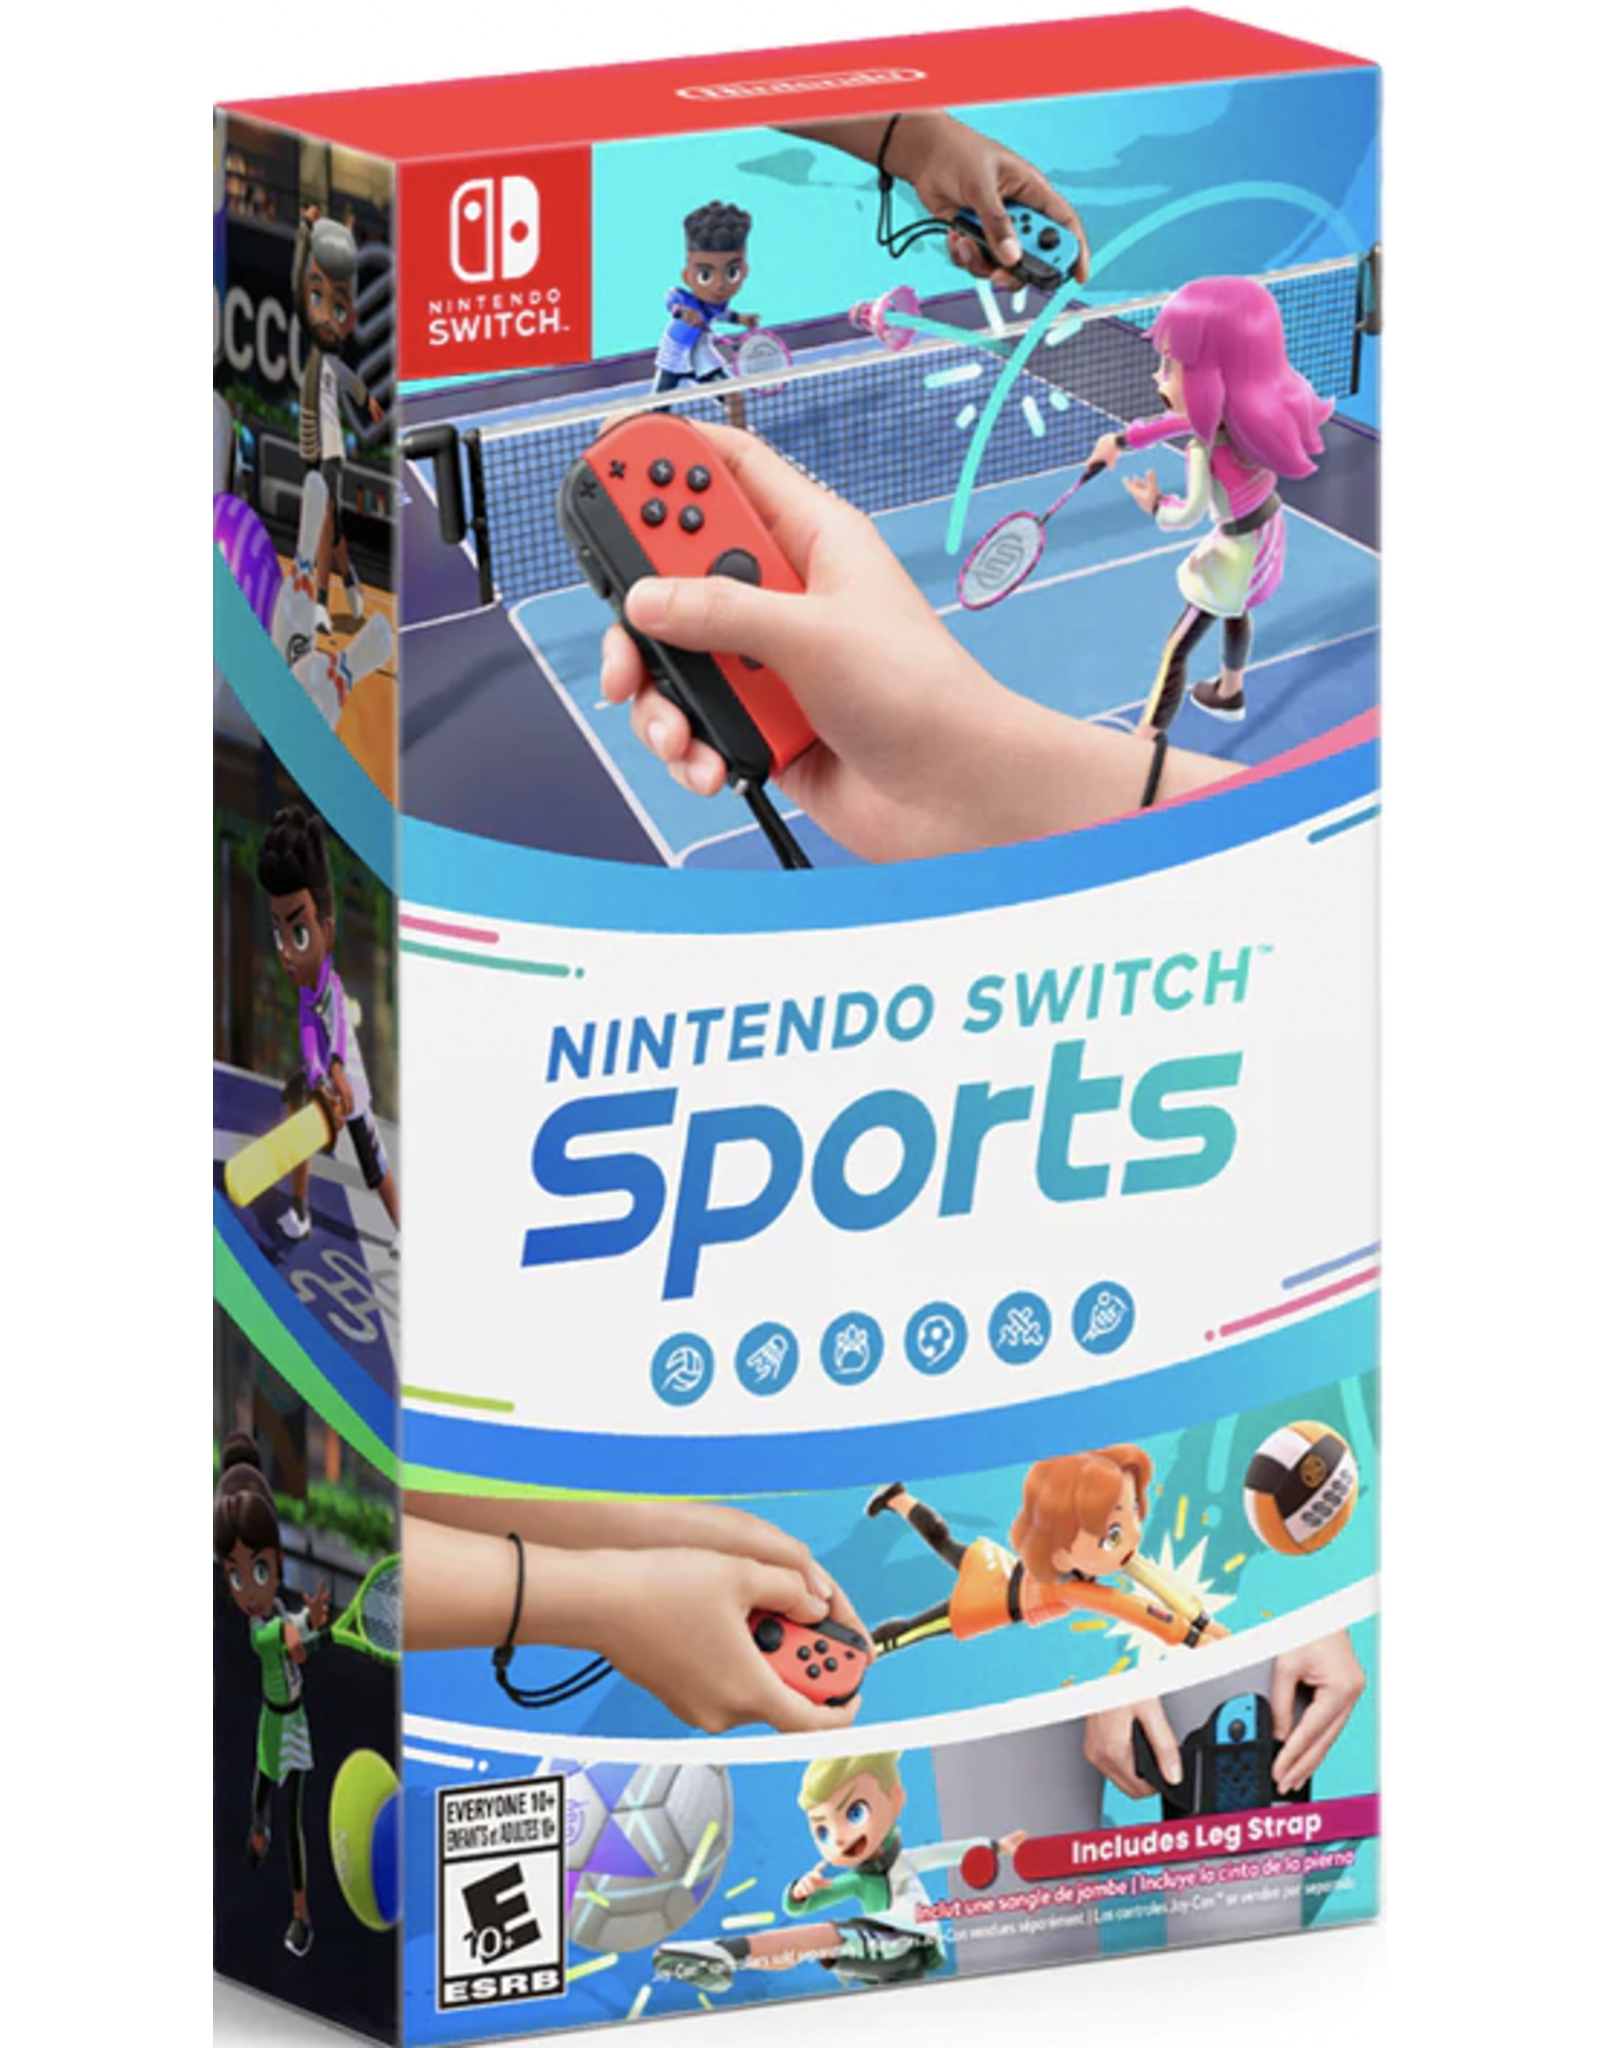 Nintendo Switch Nintendo Switch Sports with Leg Strap (Used)